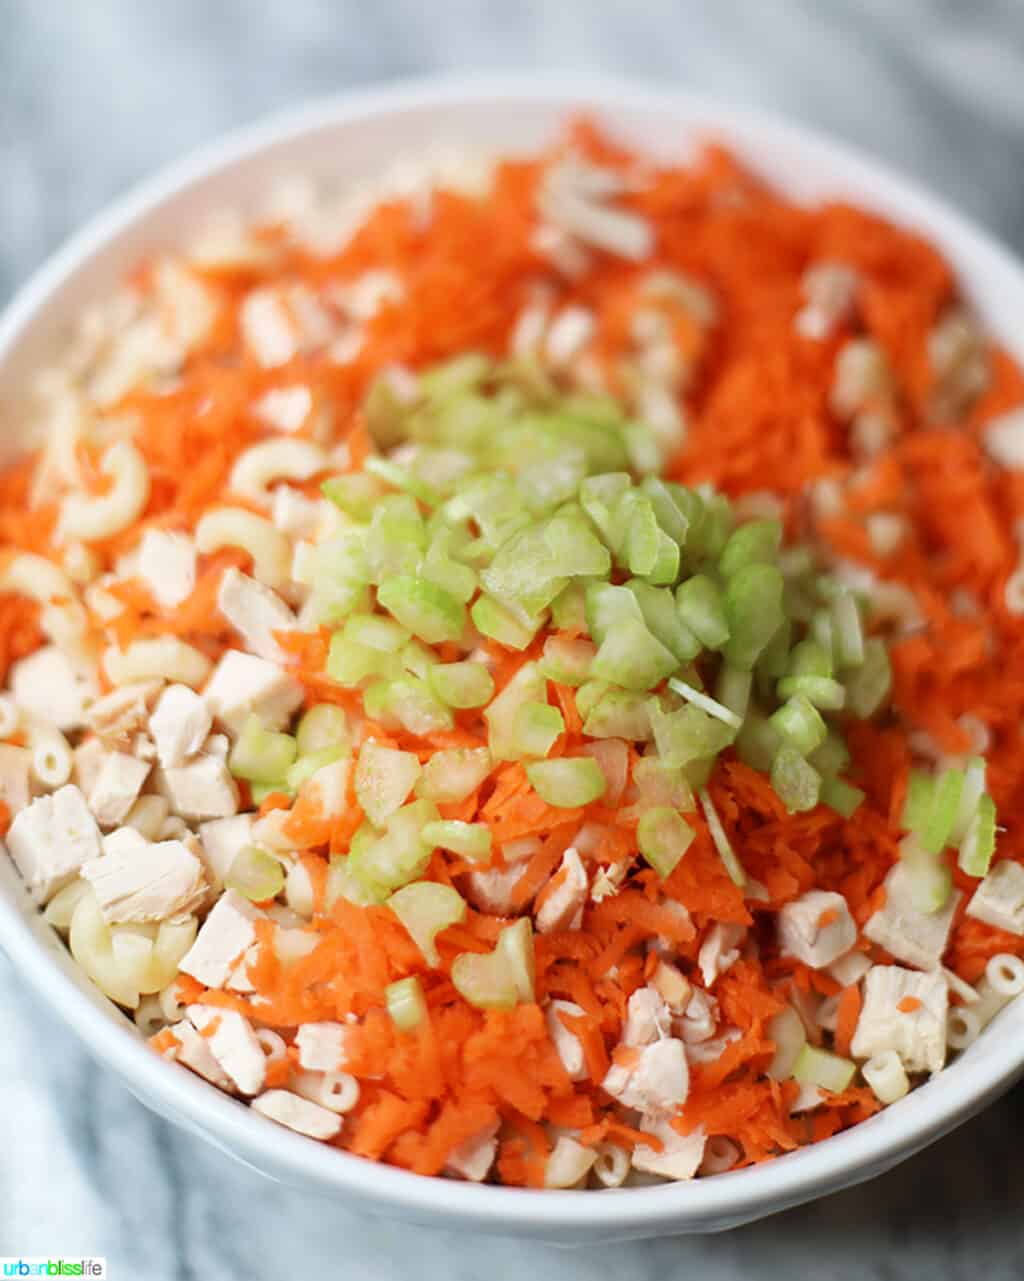 Filipino Macaroni Salad - veggies